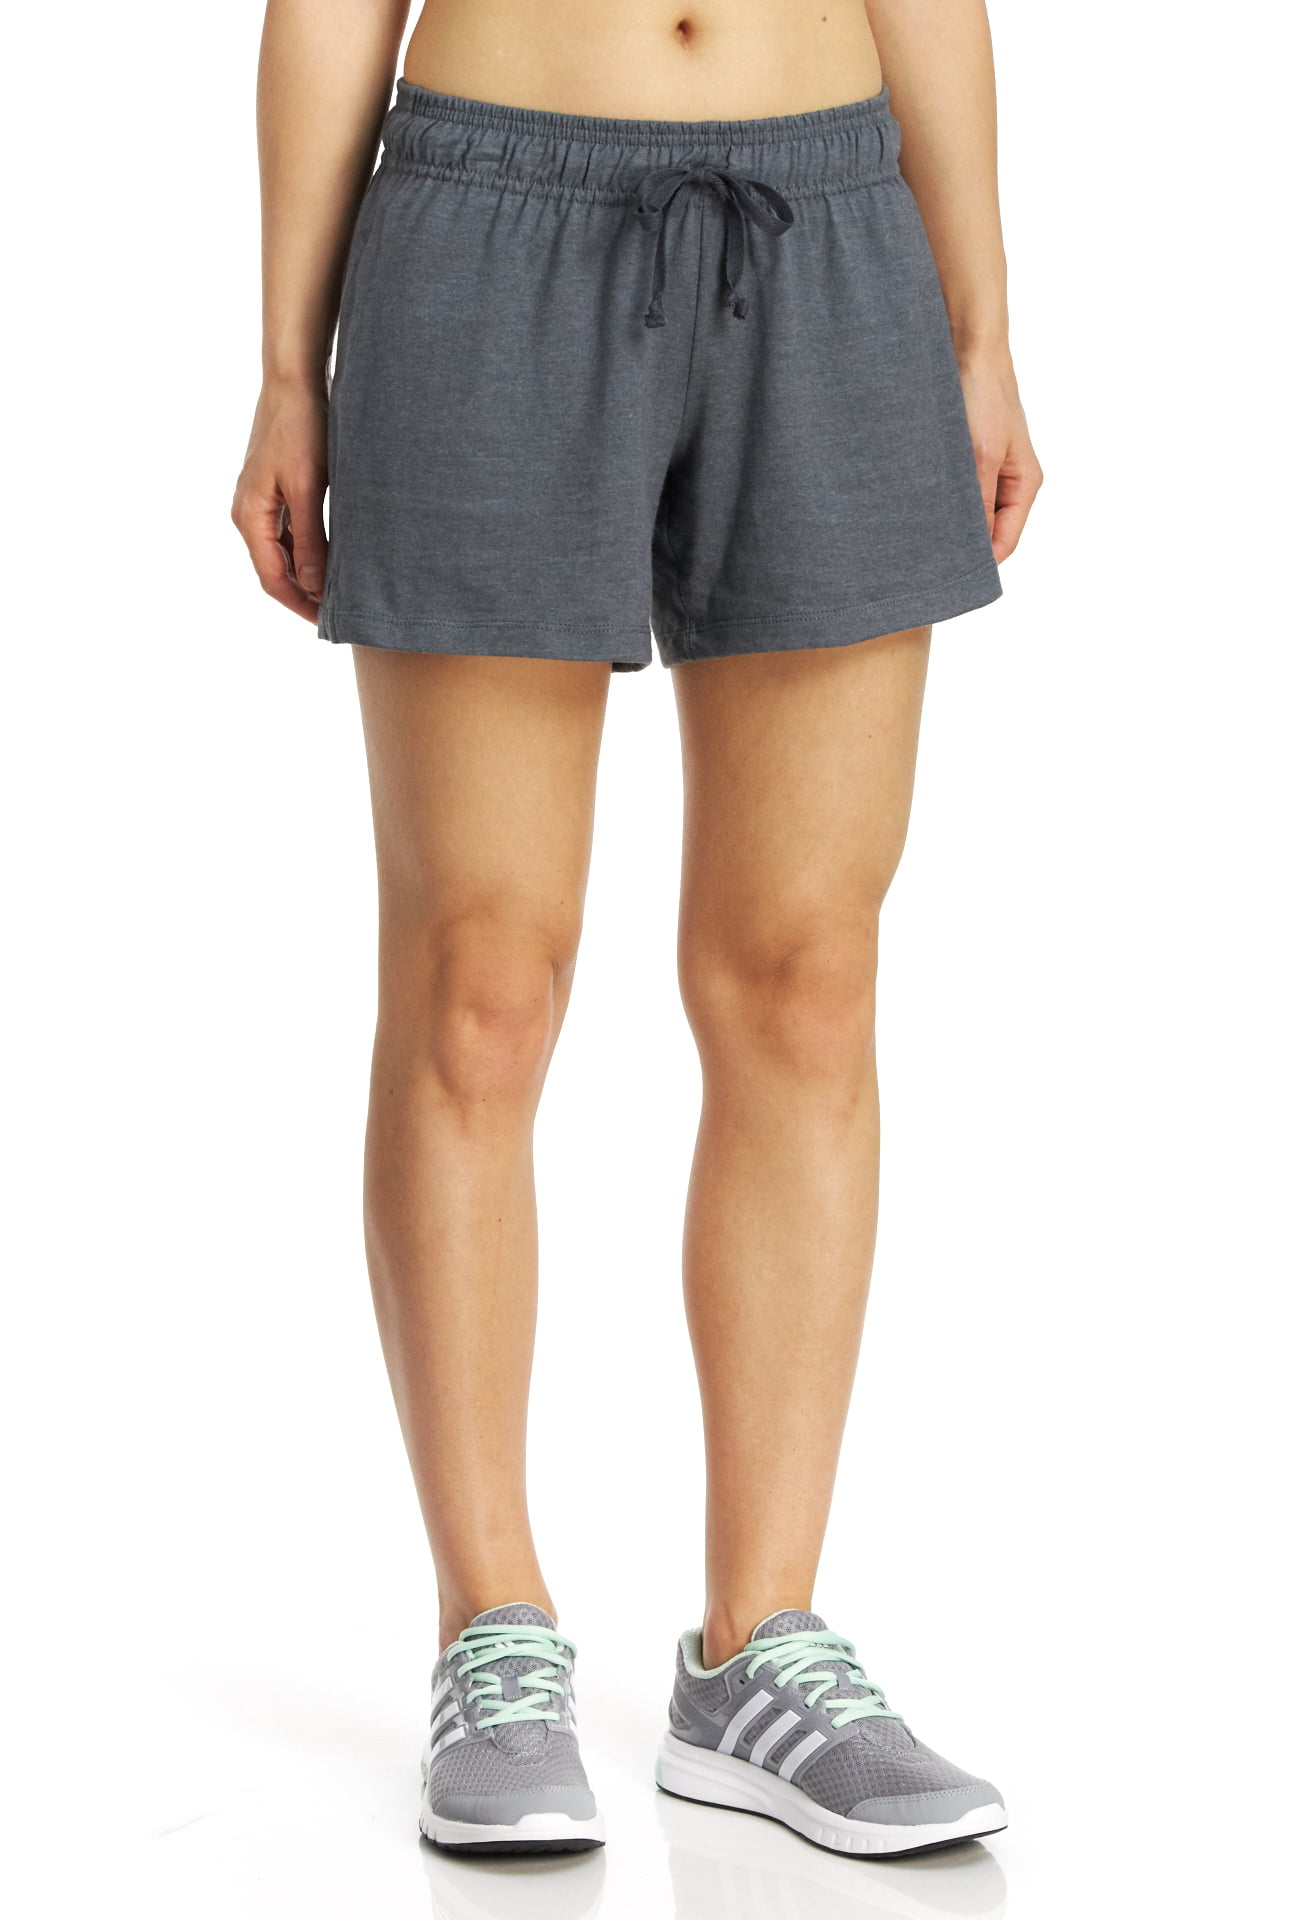 cotton jersey shorts womens